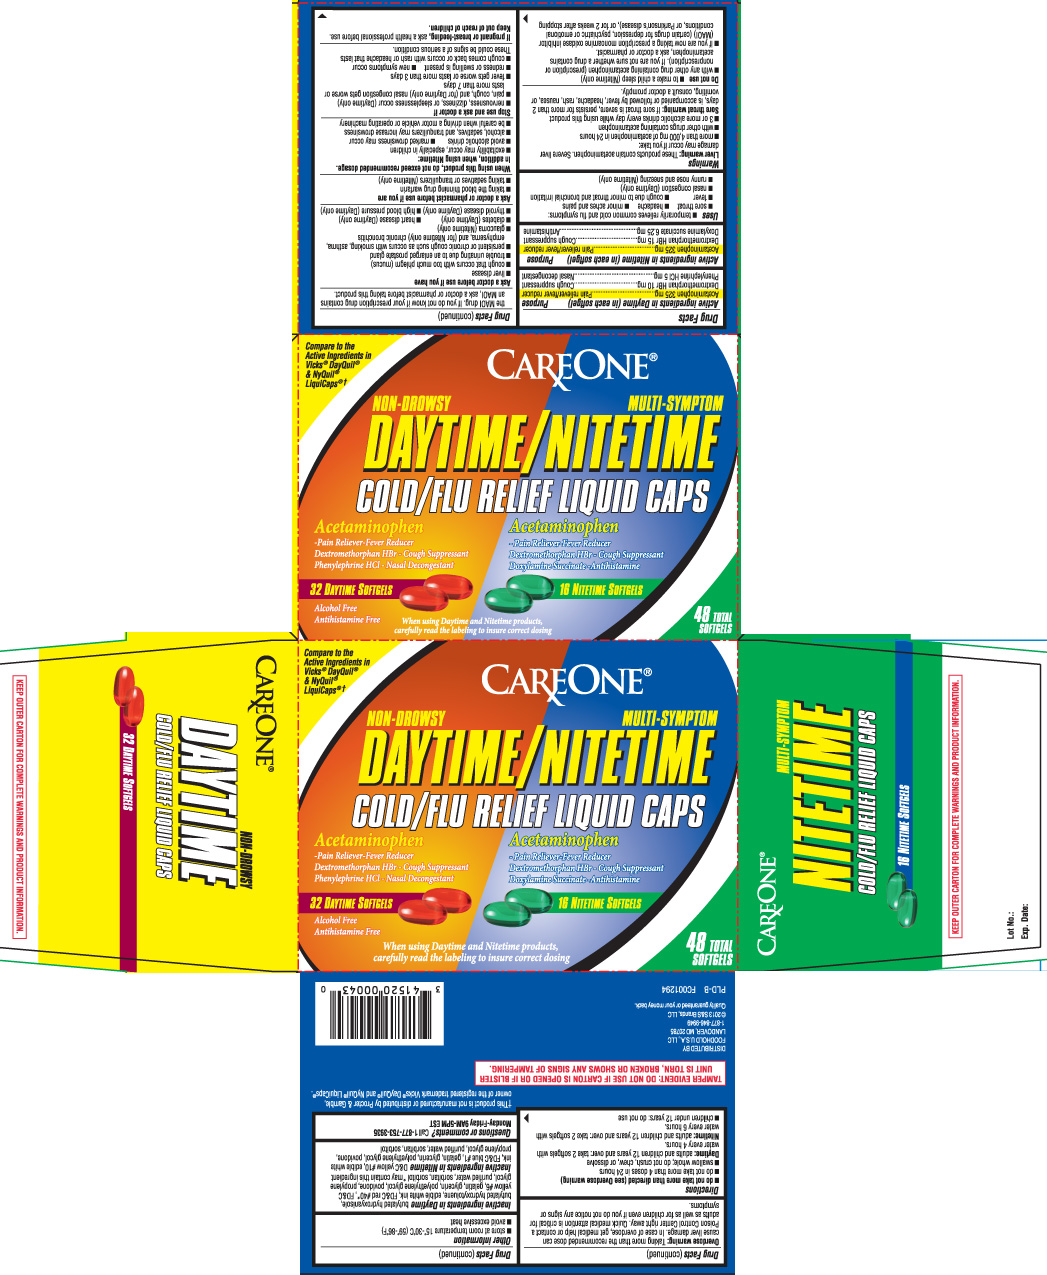 Acetaminophen 325 mg, Dextromethorphan HBr 10 mg, Phenylephrine HCl 5 mg, Dextromethorphan HBr 15 mg, Doxylamine succinate 6.25 mg